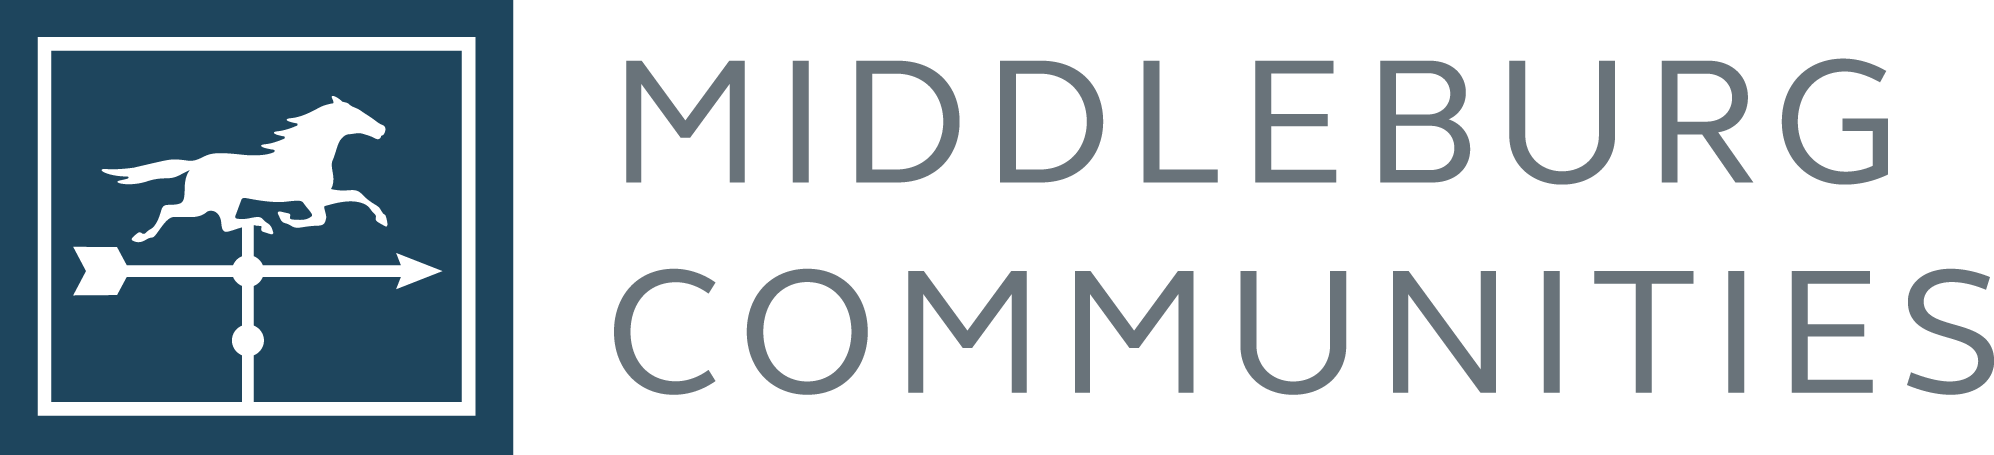 Middleburg Communities logo